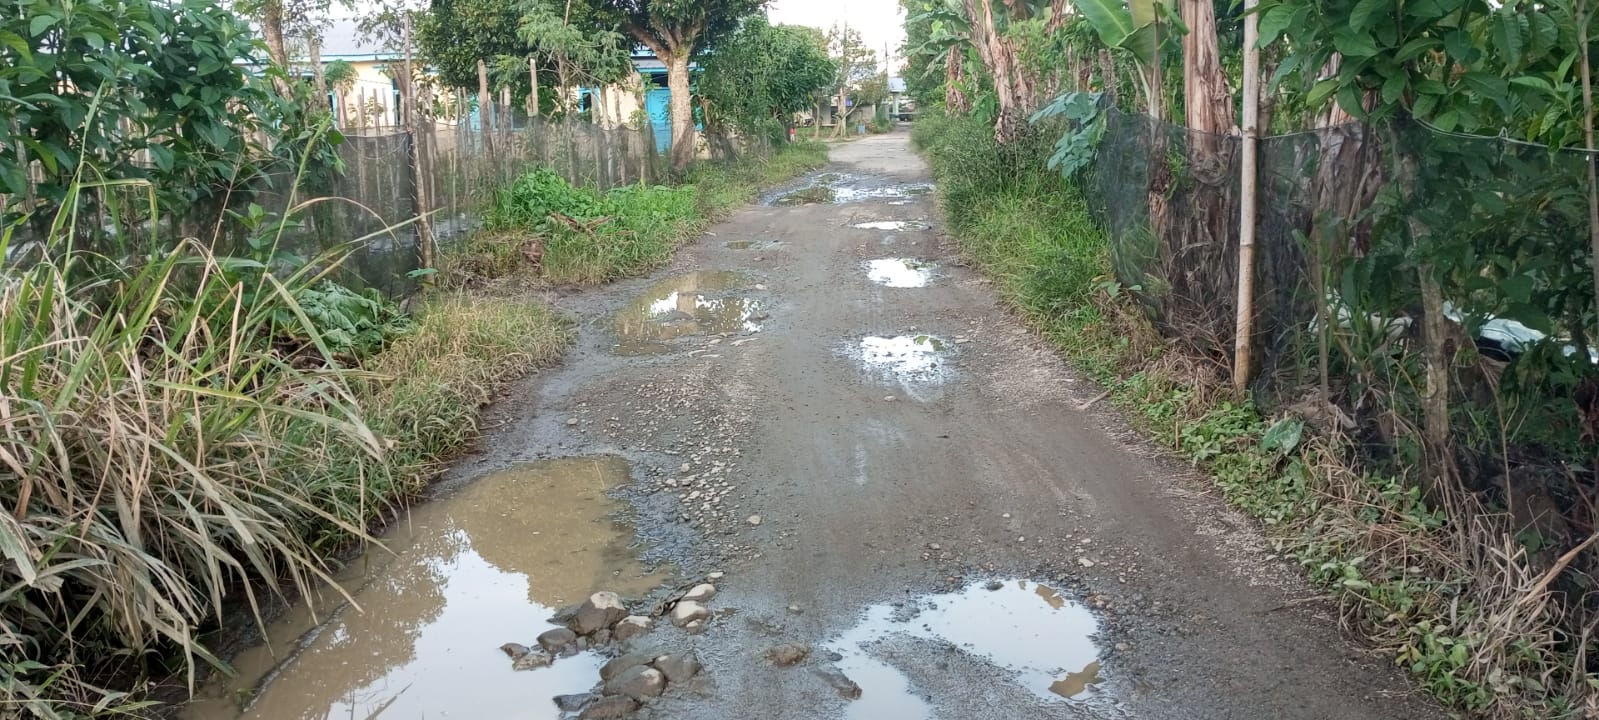 Jalan Lingkar Simpang Serdang-Kodim Rusak Parah, Penanganan Ada Tapi Bertahap